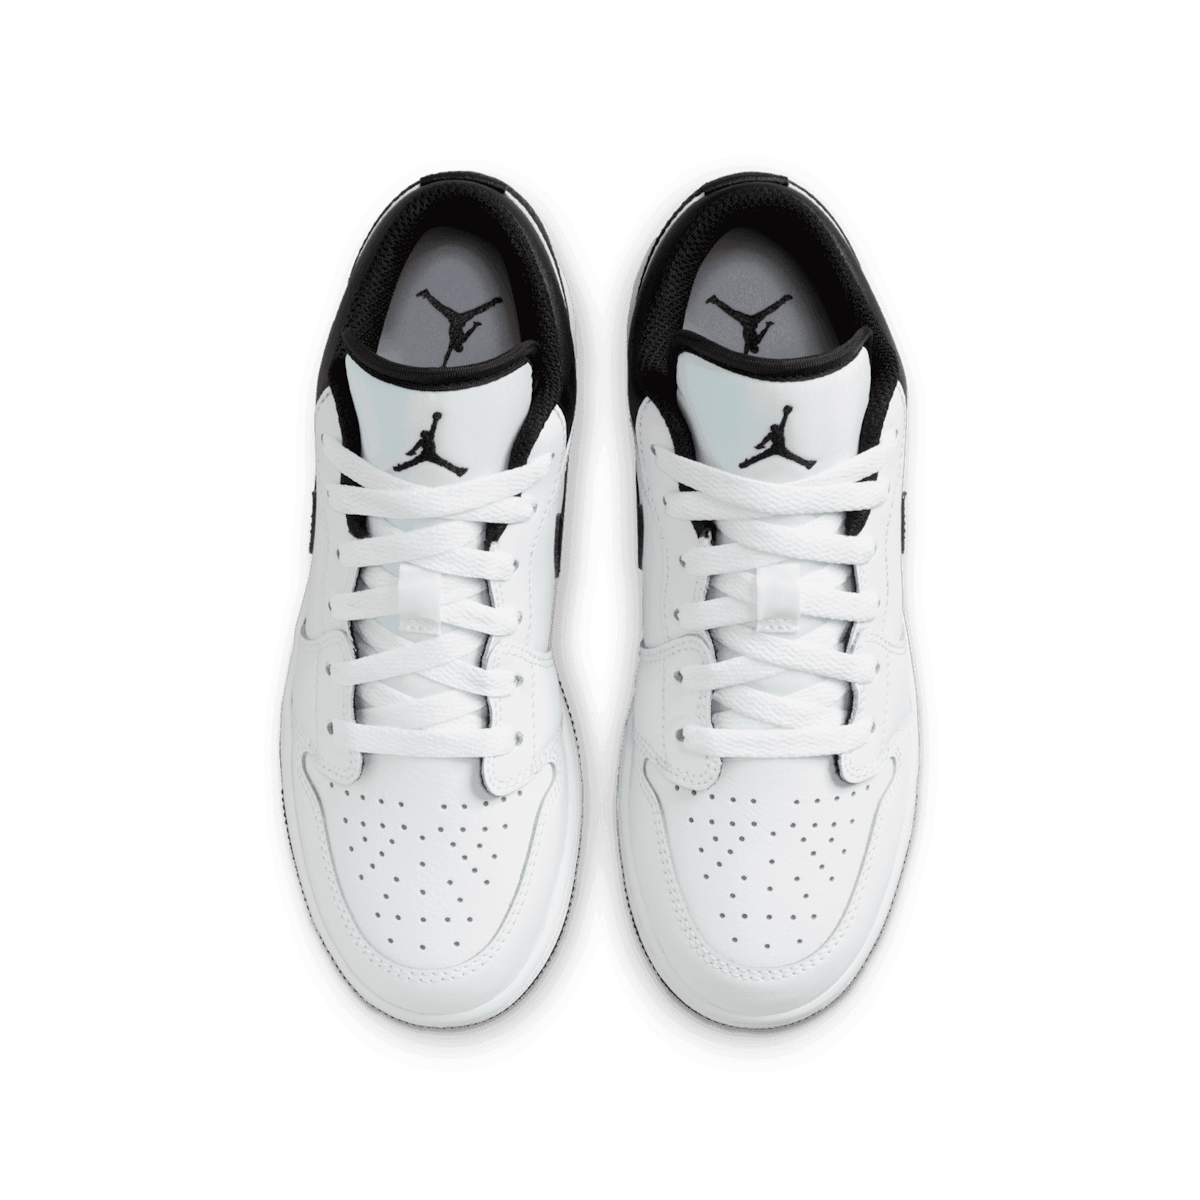 Air Jordan 1 Low White Black (GS) Angle 1